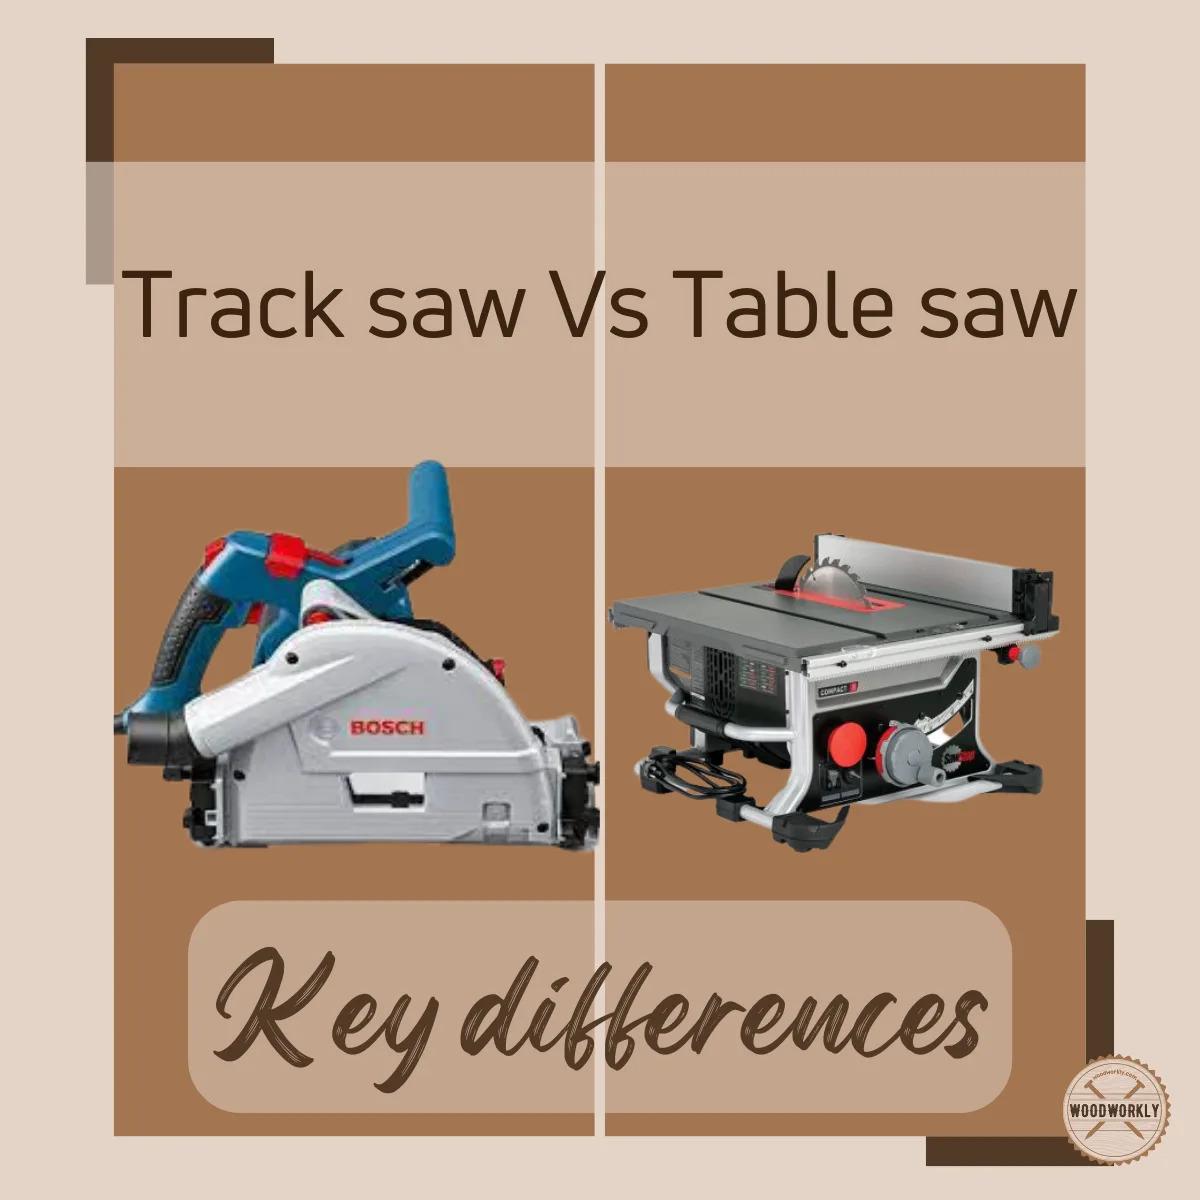 Track saw Vs Table saw